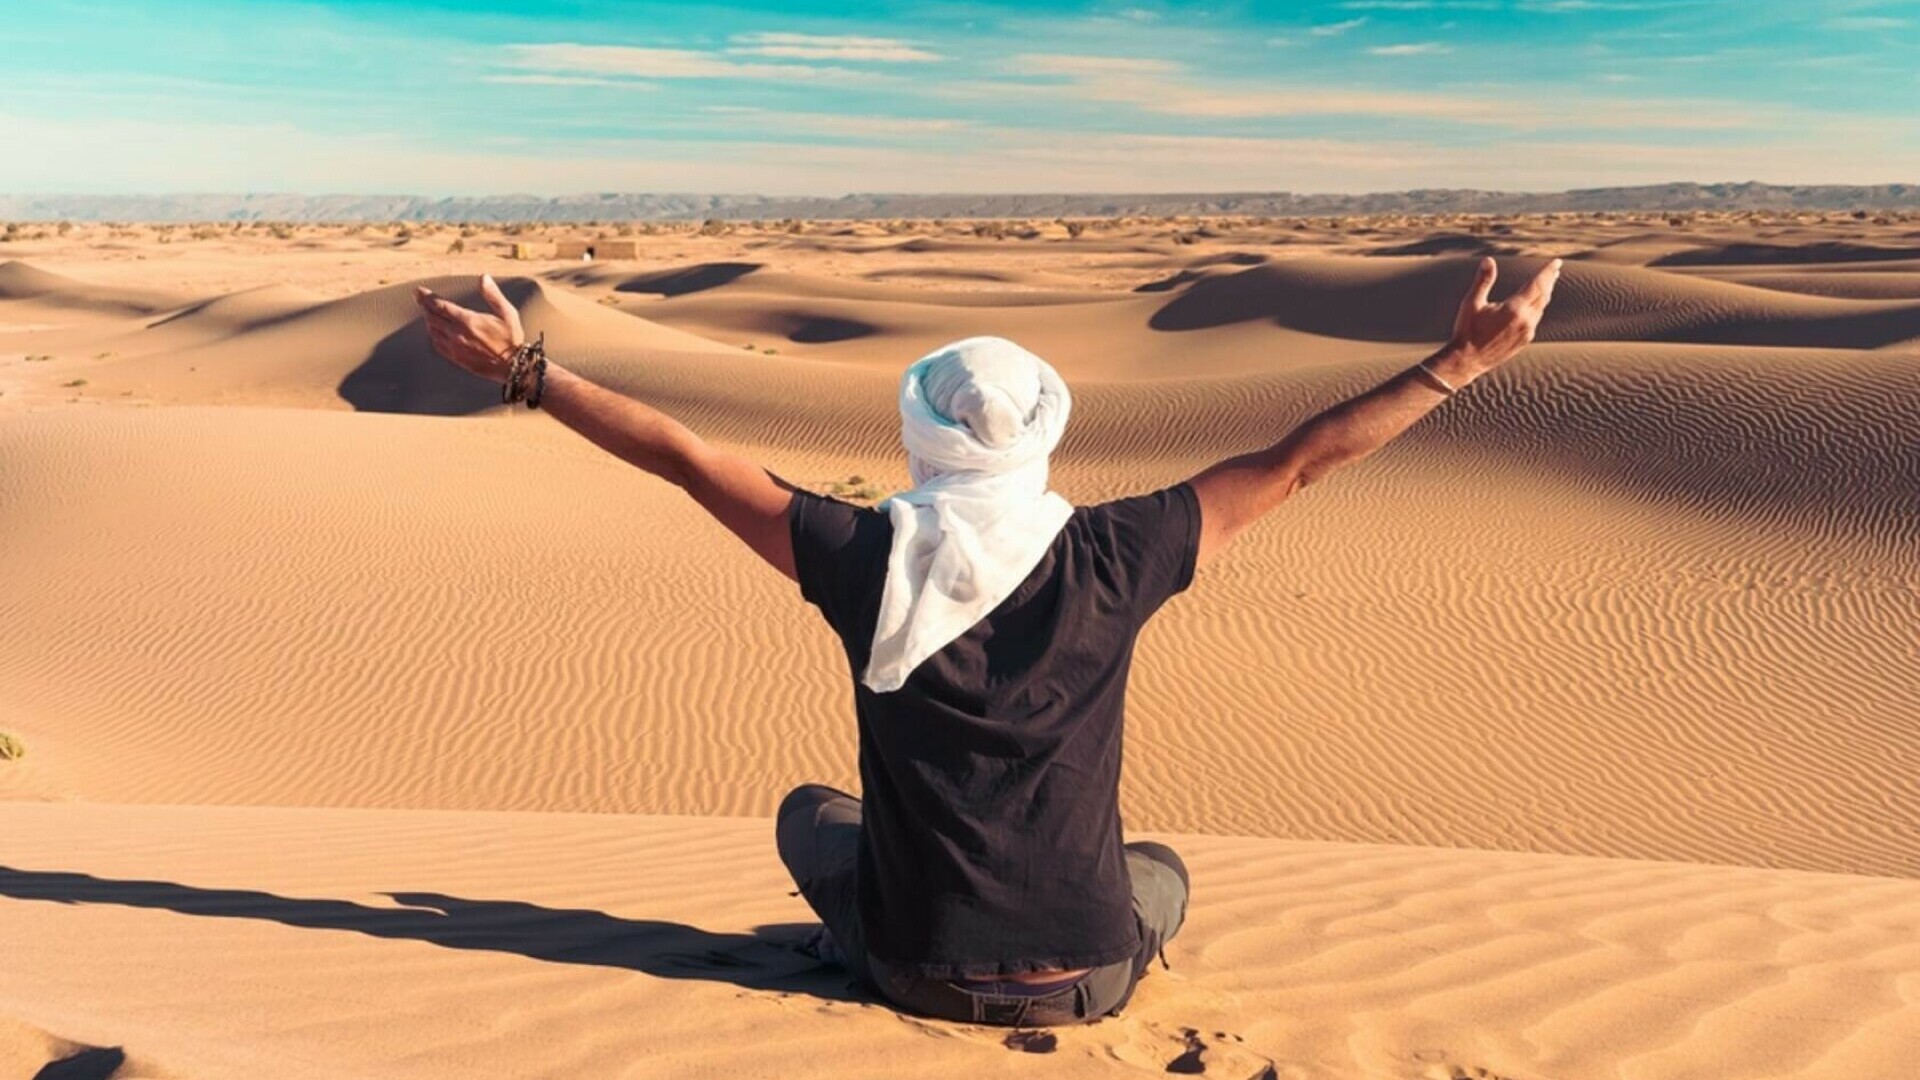 Sahara, desert